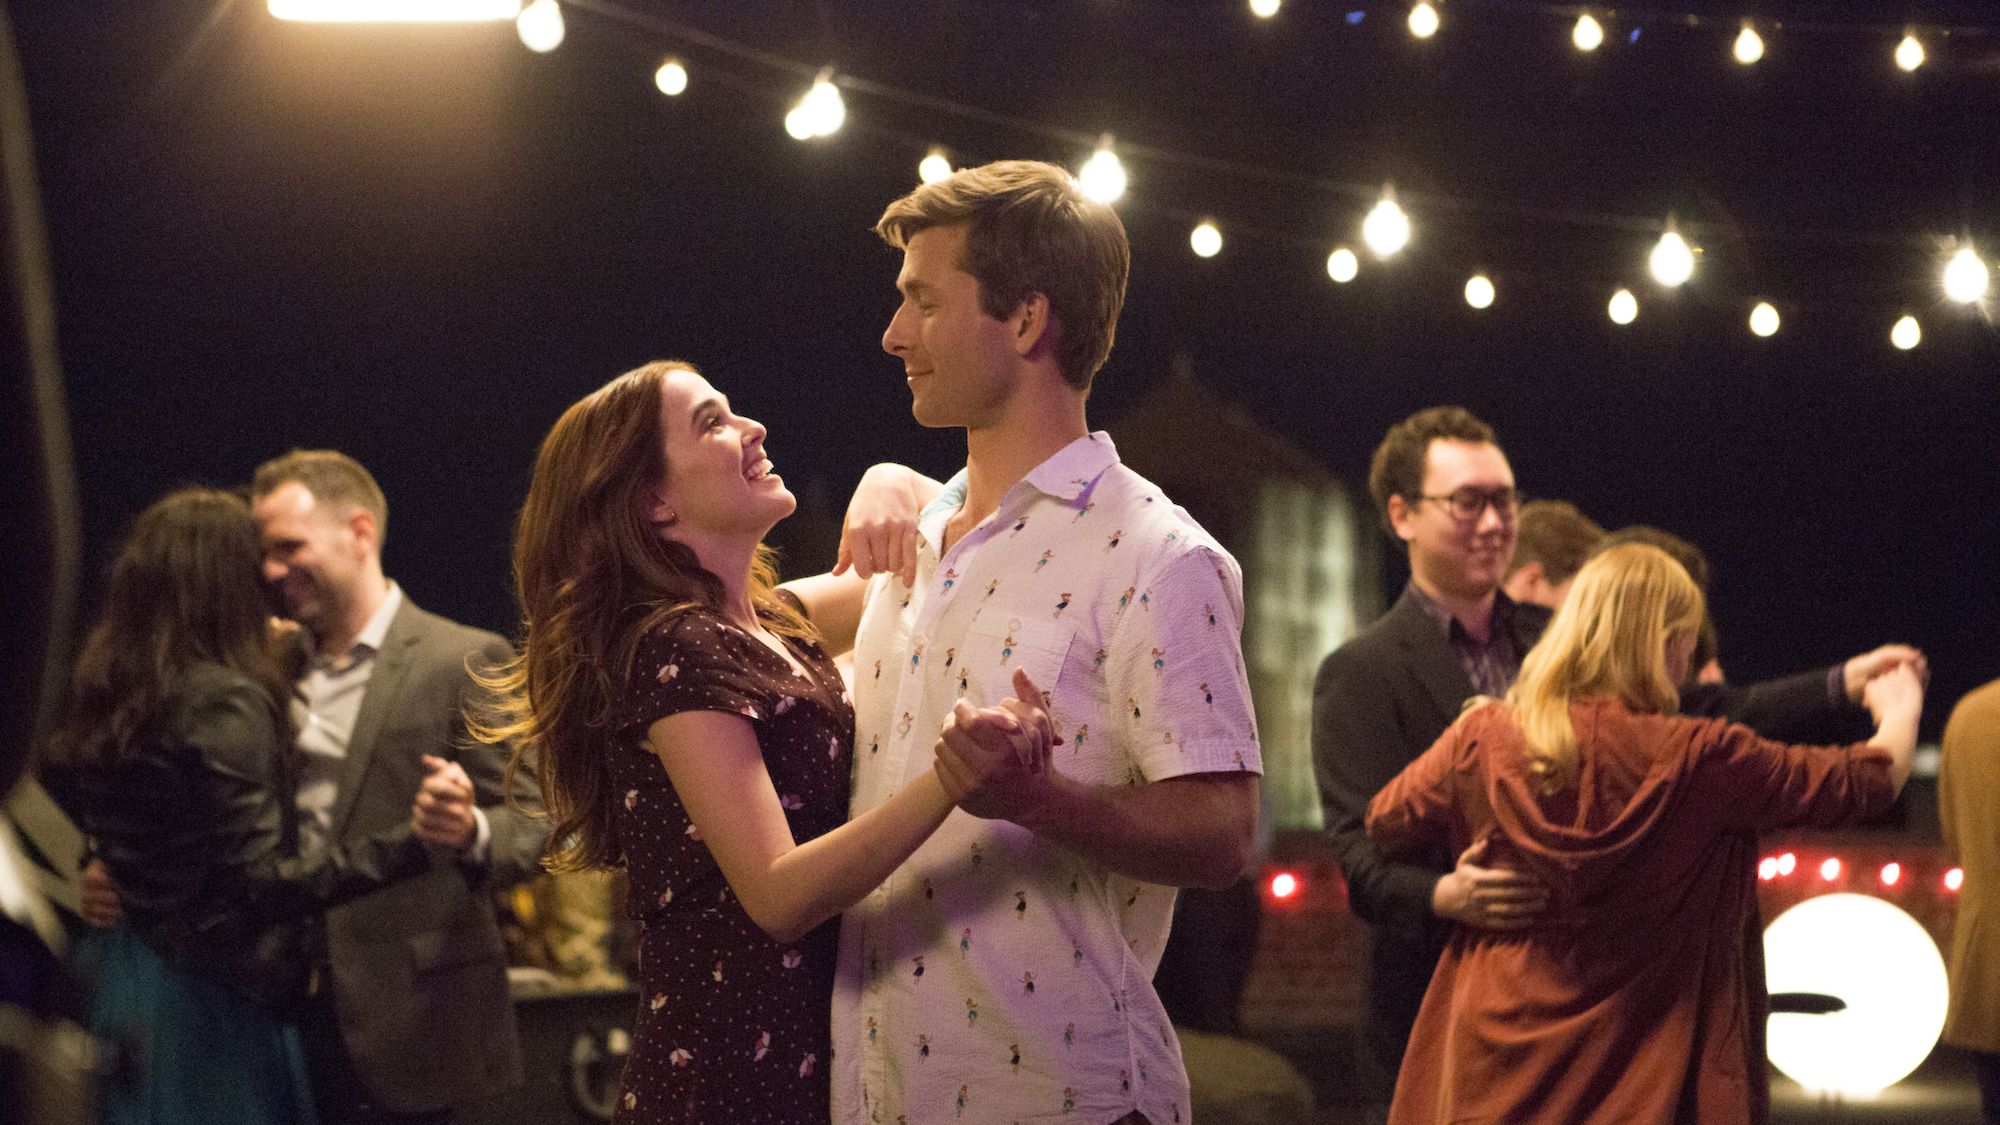 14 Best Romantic Comedies on Netflix - Top Rom Coms to Stream on Netflix